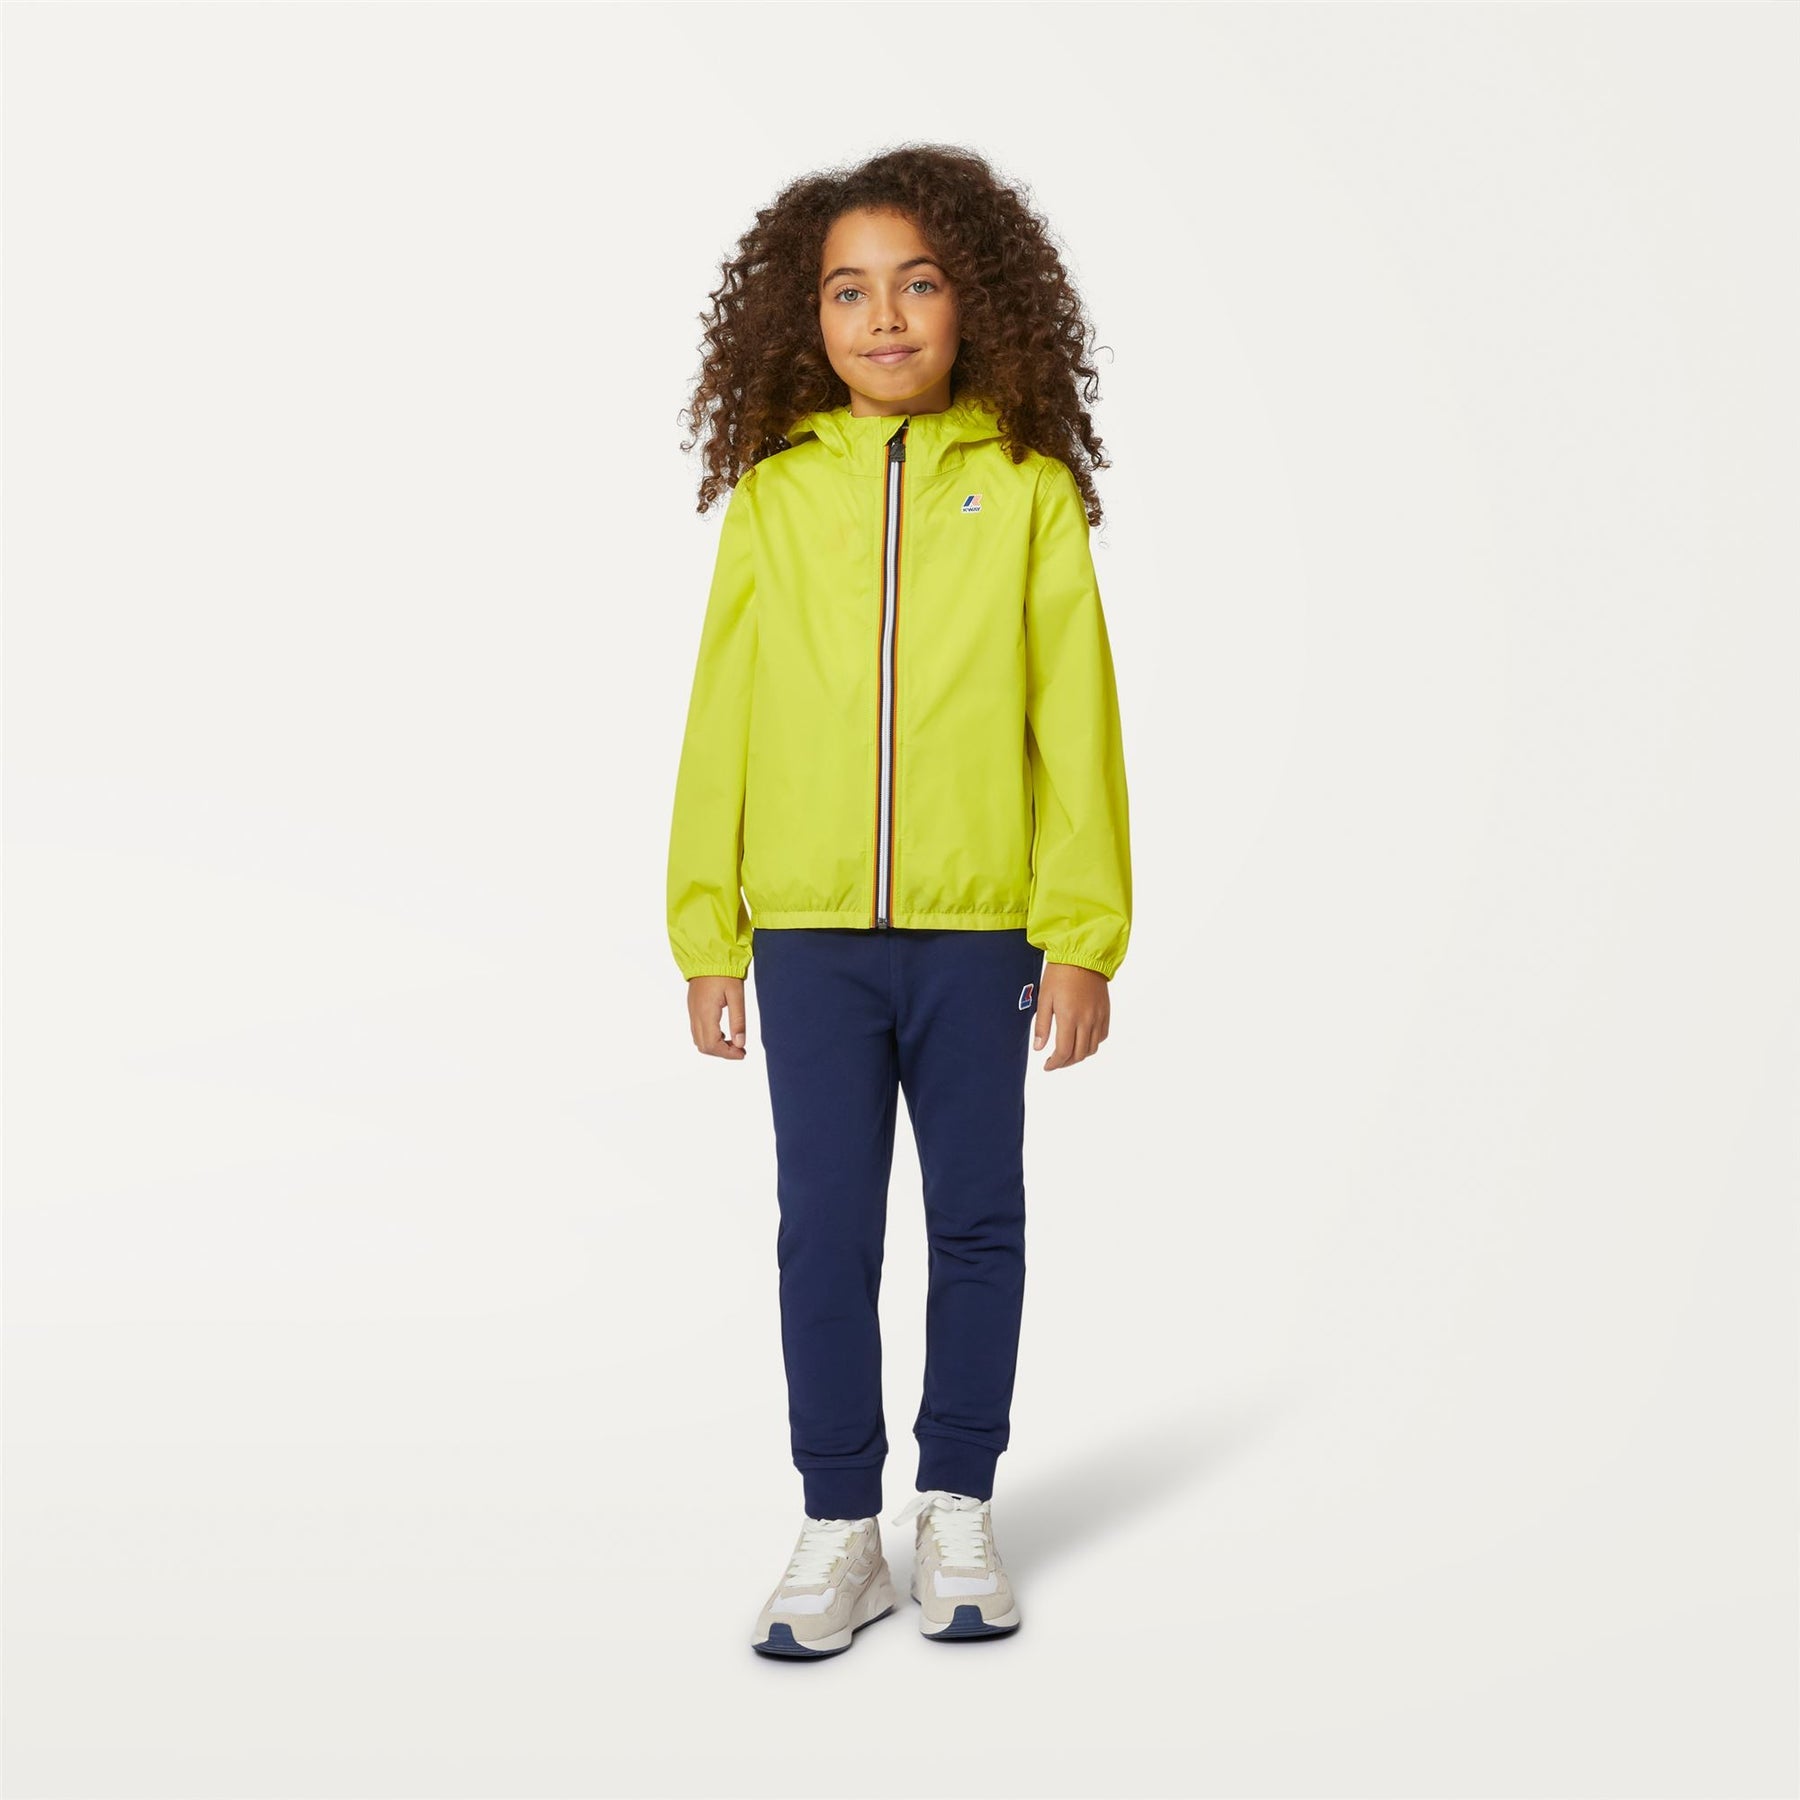 Claude - Kids Packable Full Zip Rain Jacket in Green Lime